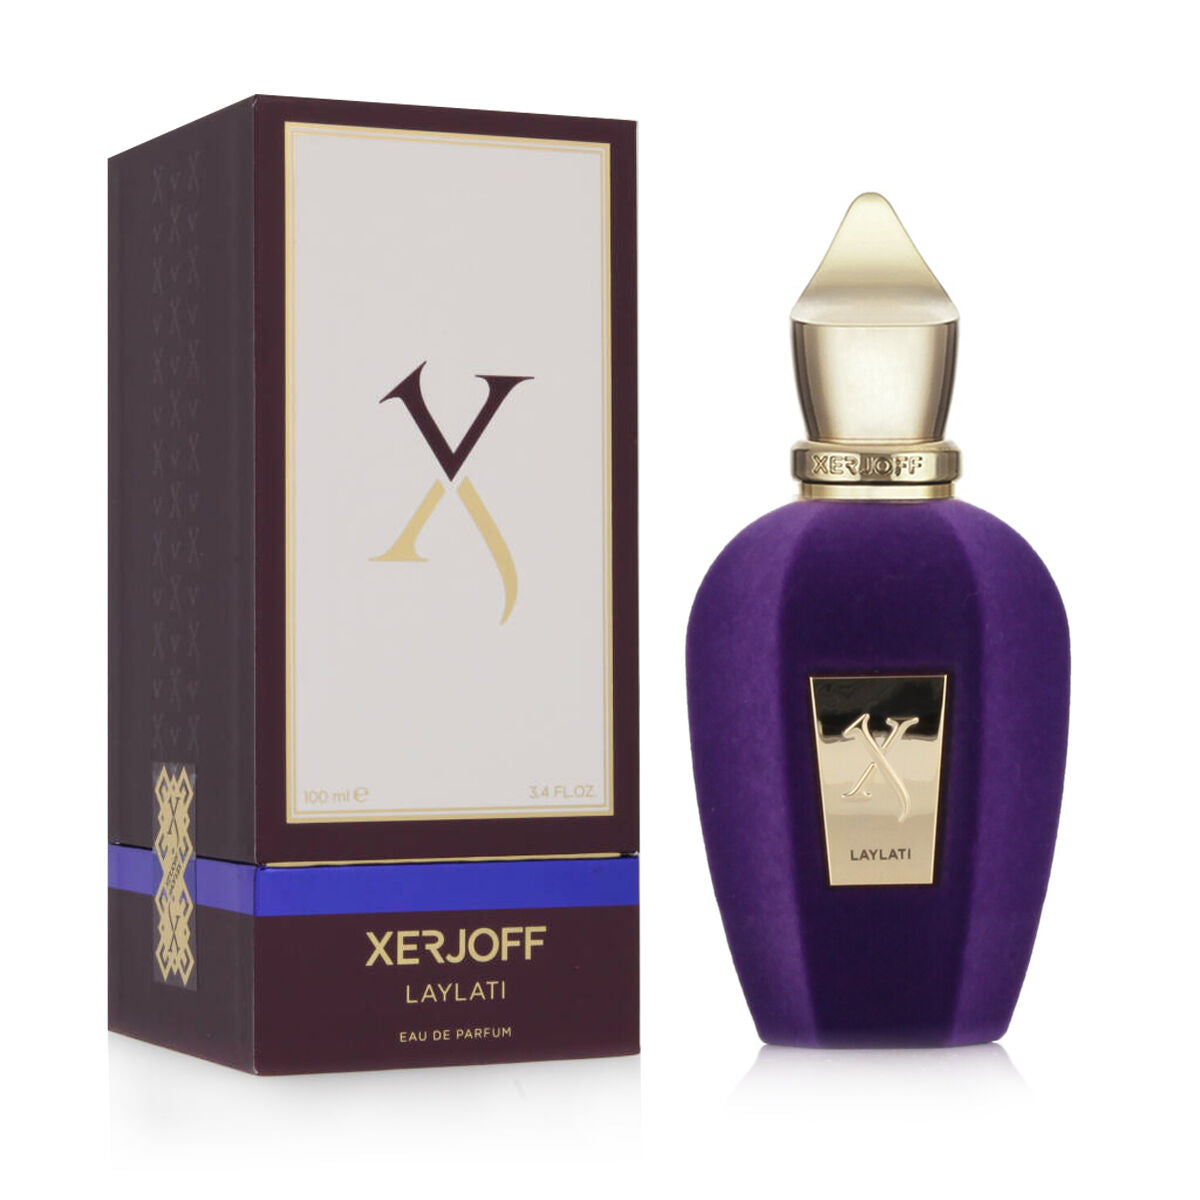 Kaufe Unisex-Parfüm Xerjoff EDP V Laylati 100 ml bei AWK Flagship um € 194.00